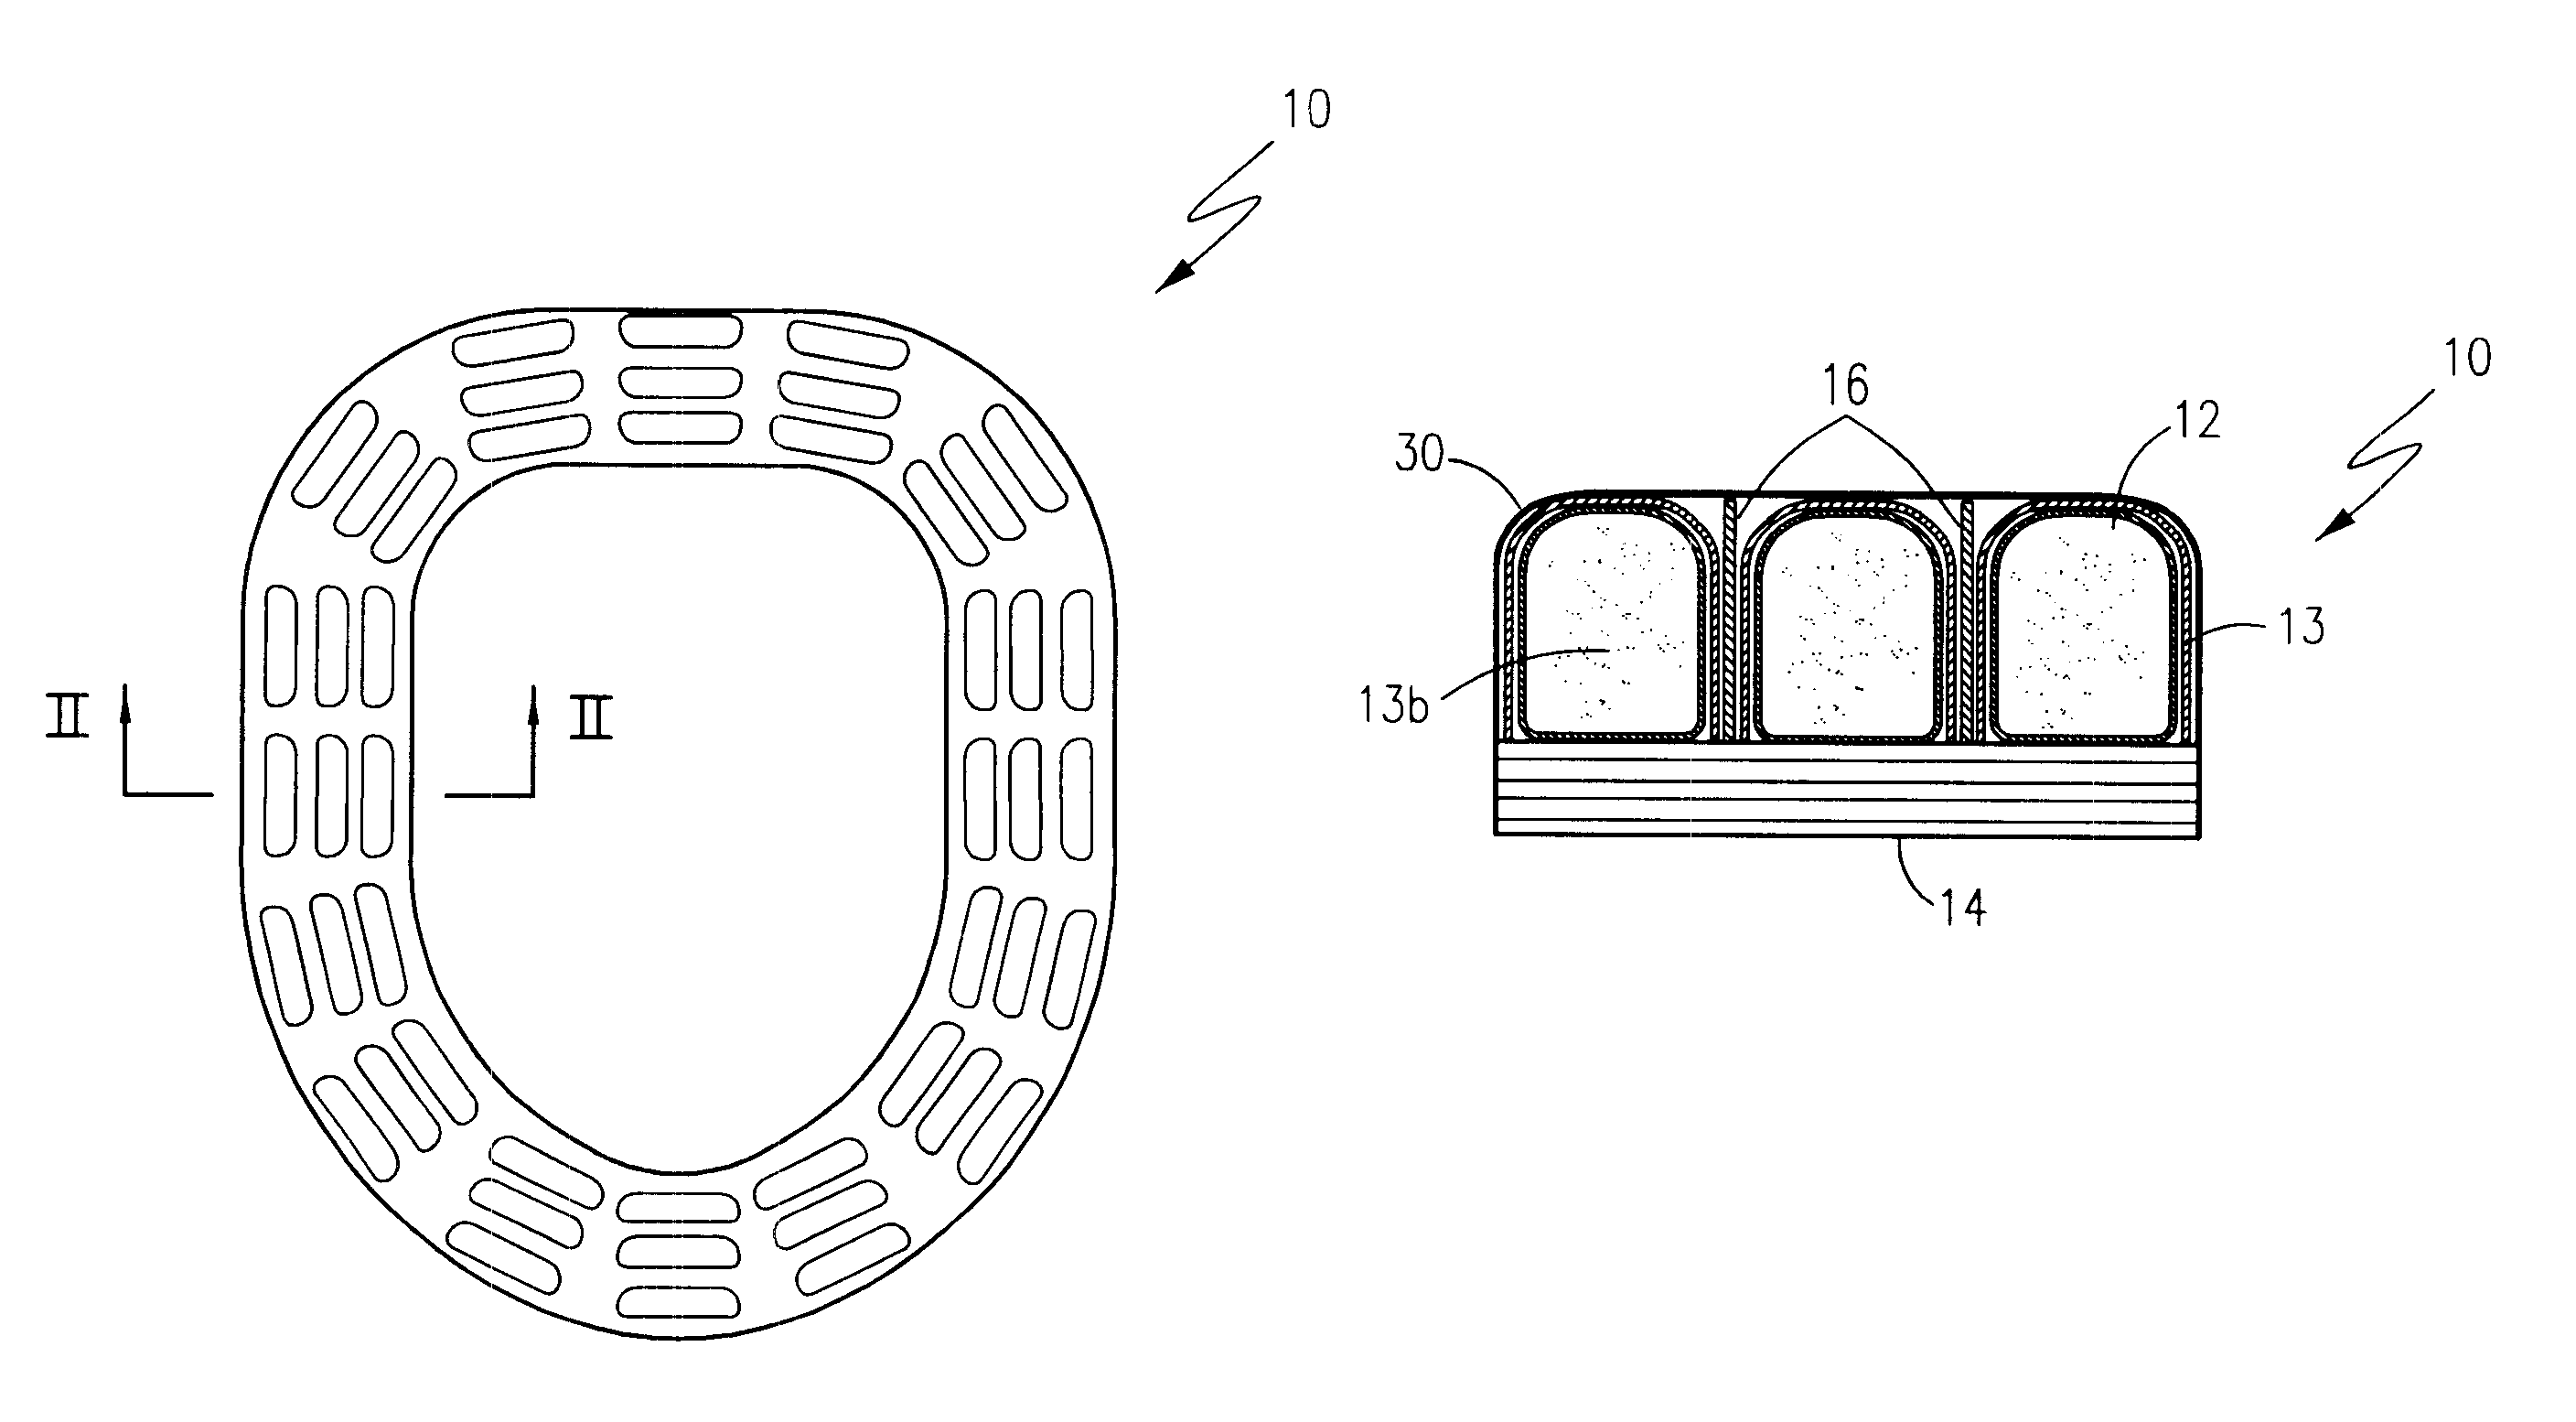 Fluid-cell toilet seat